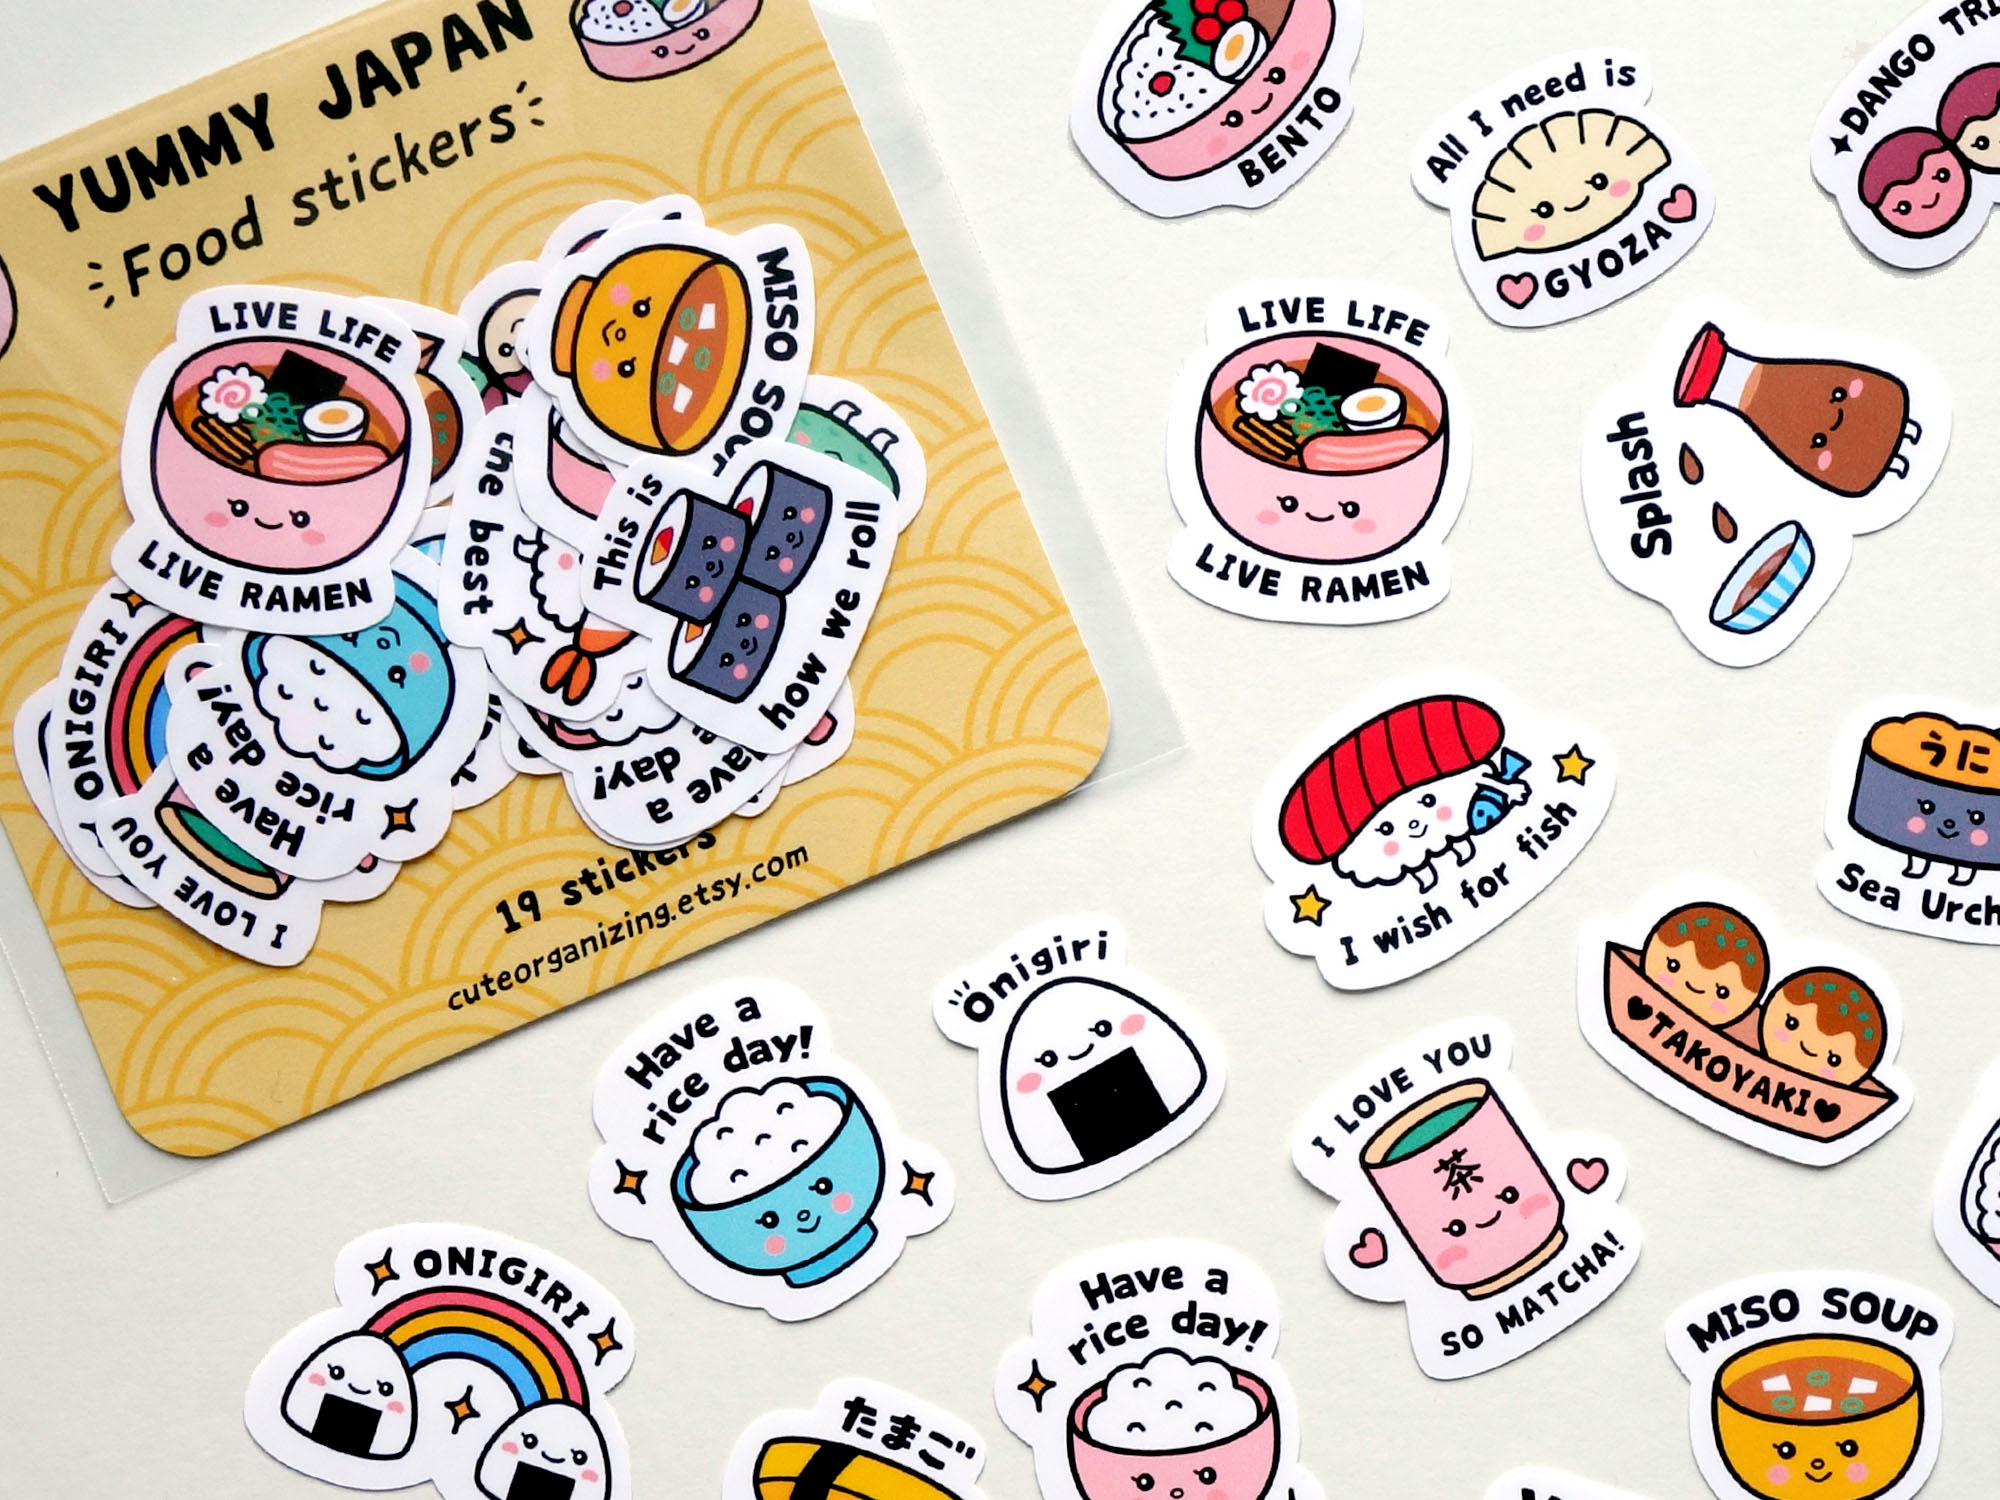 Super Cute Yummy Japan Food Stickers & Note Stickers! – Filofax Love